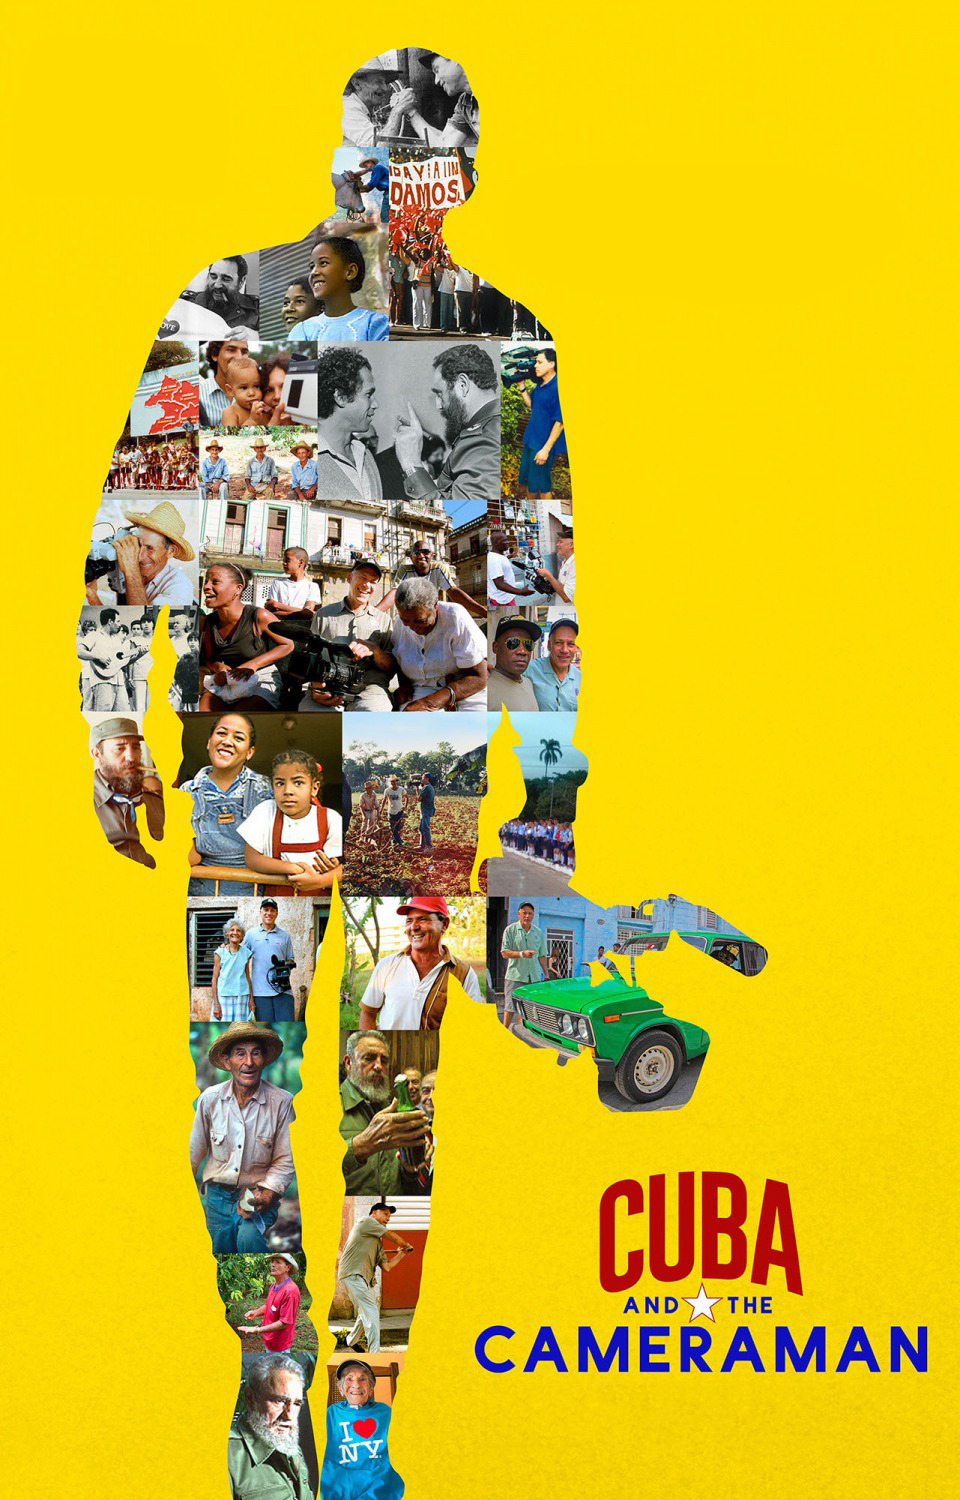 Un caméraman à Cuba